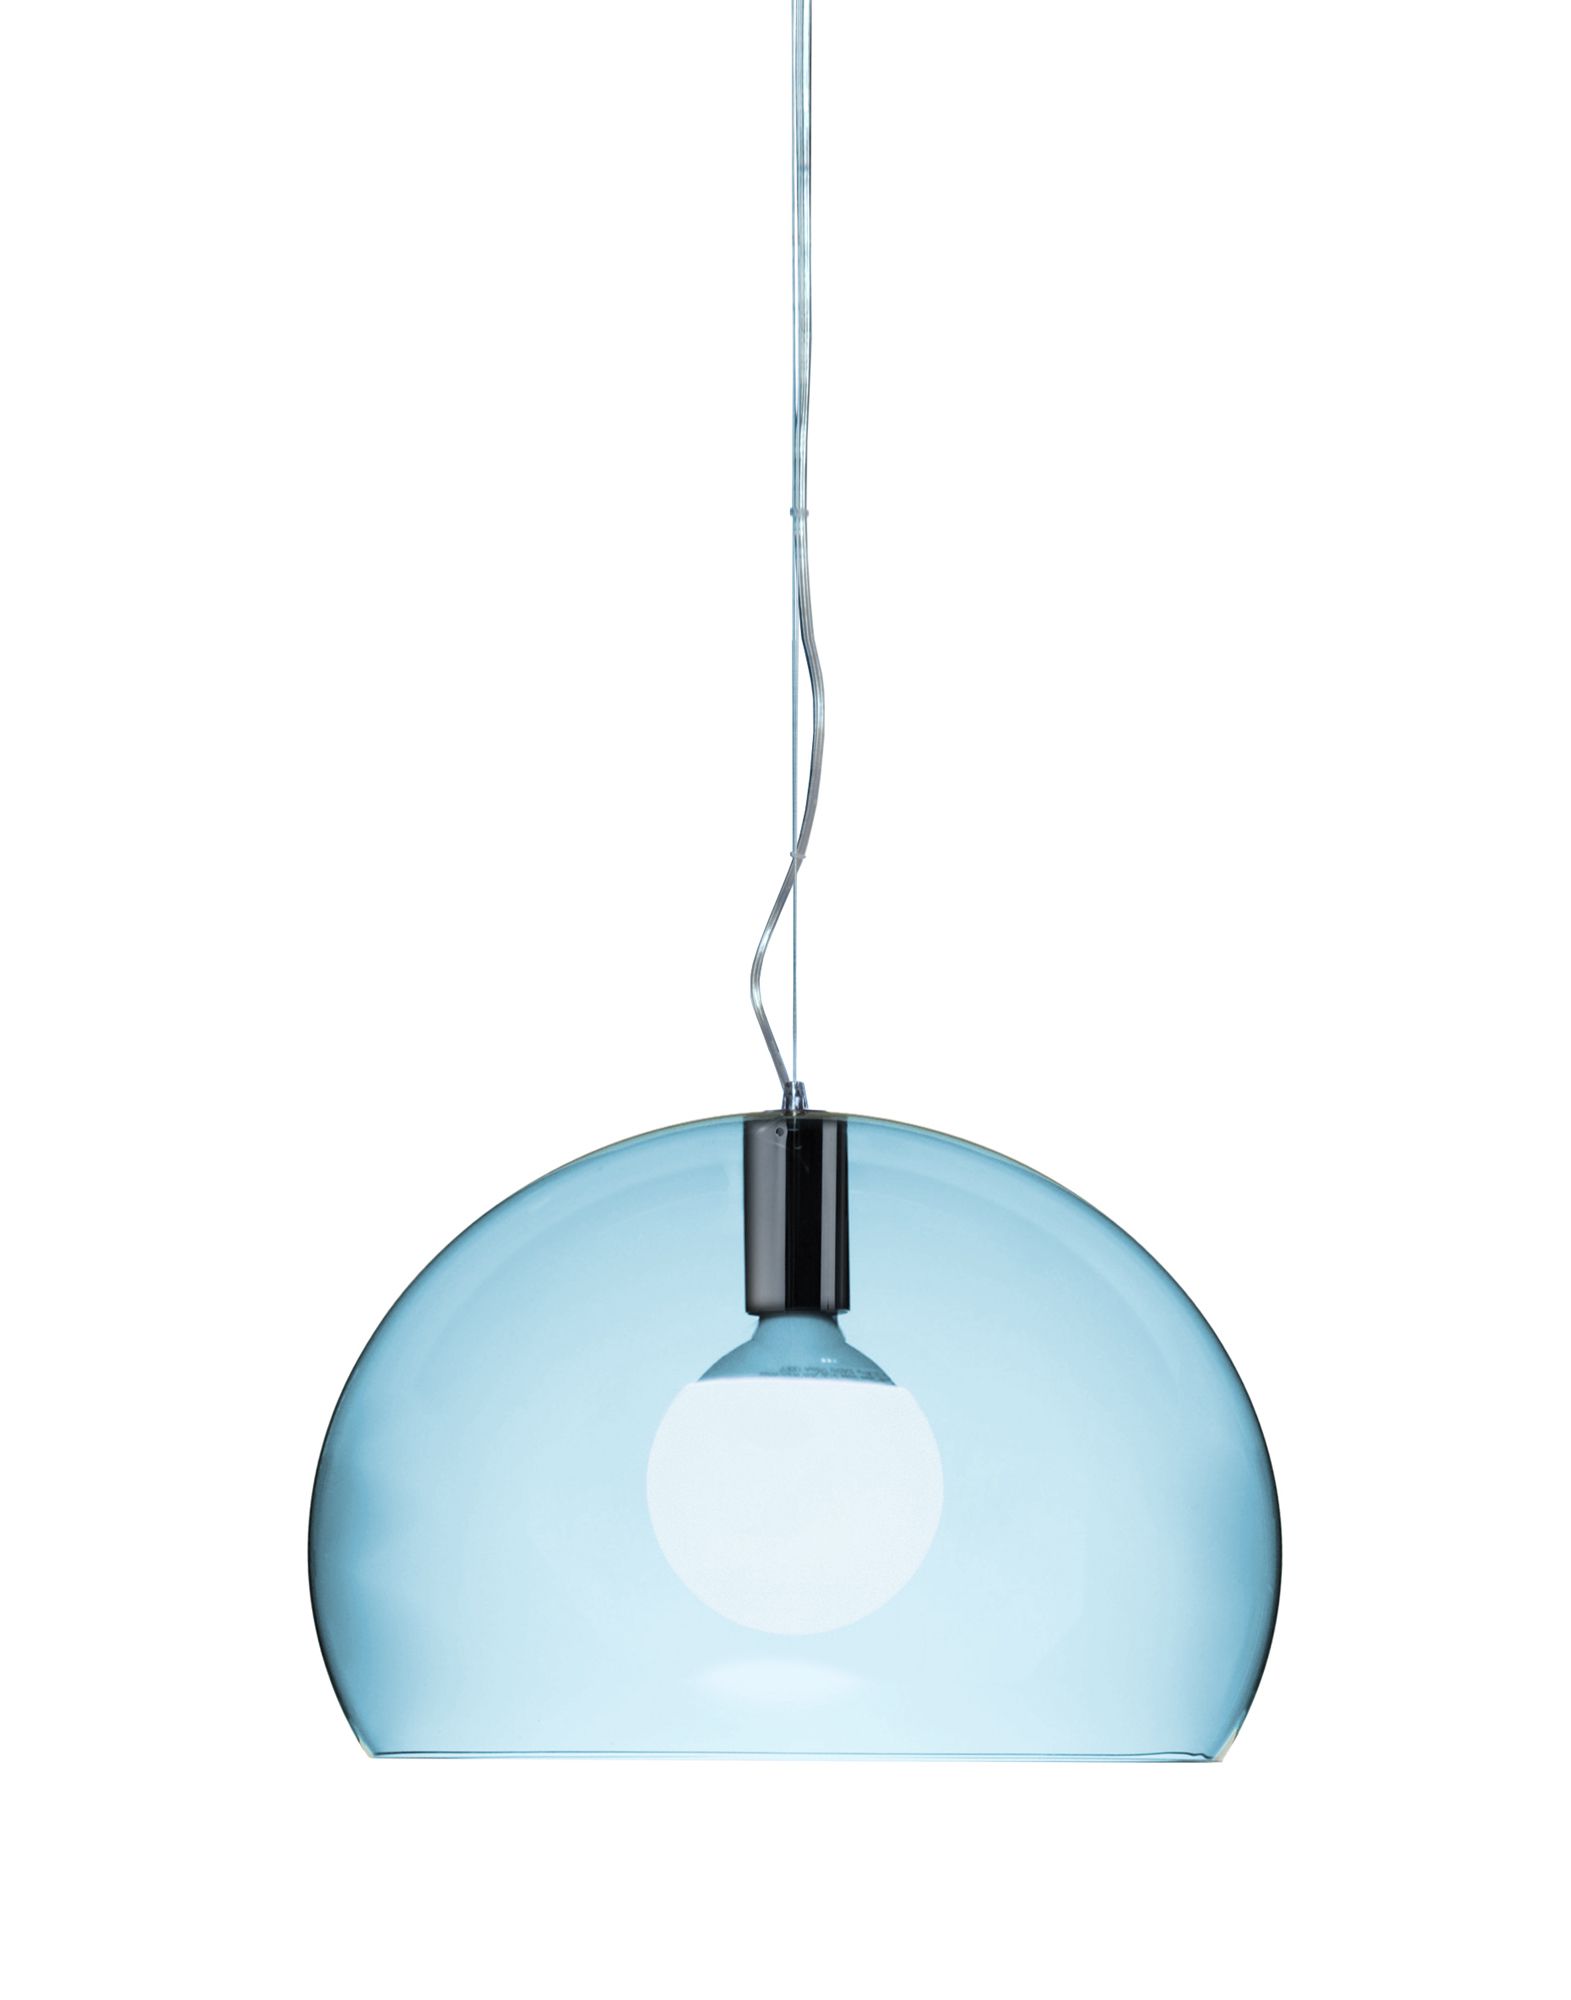 Suspensie Kartell FL/Y design Ferruccio Laviani E27 max 15W LED h28cm bleu transparent